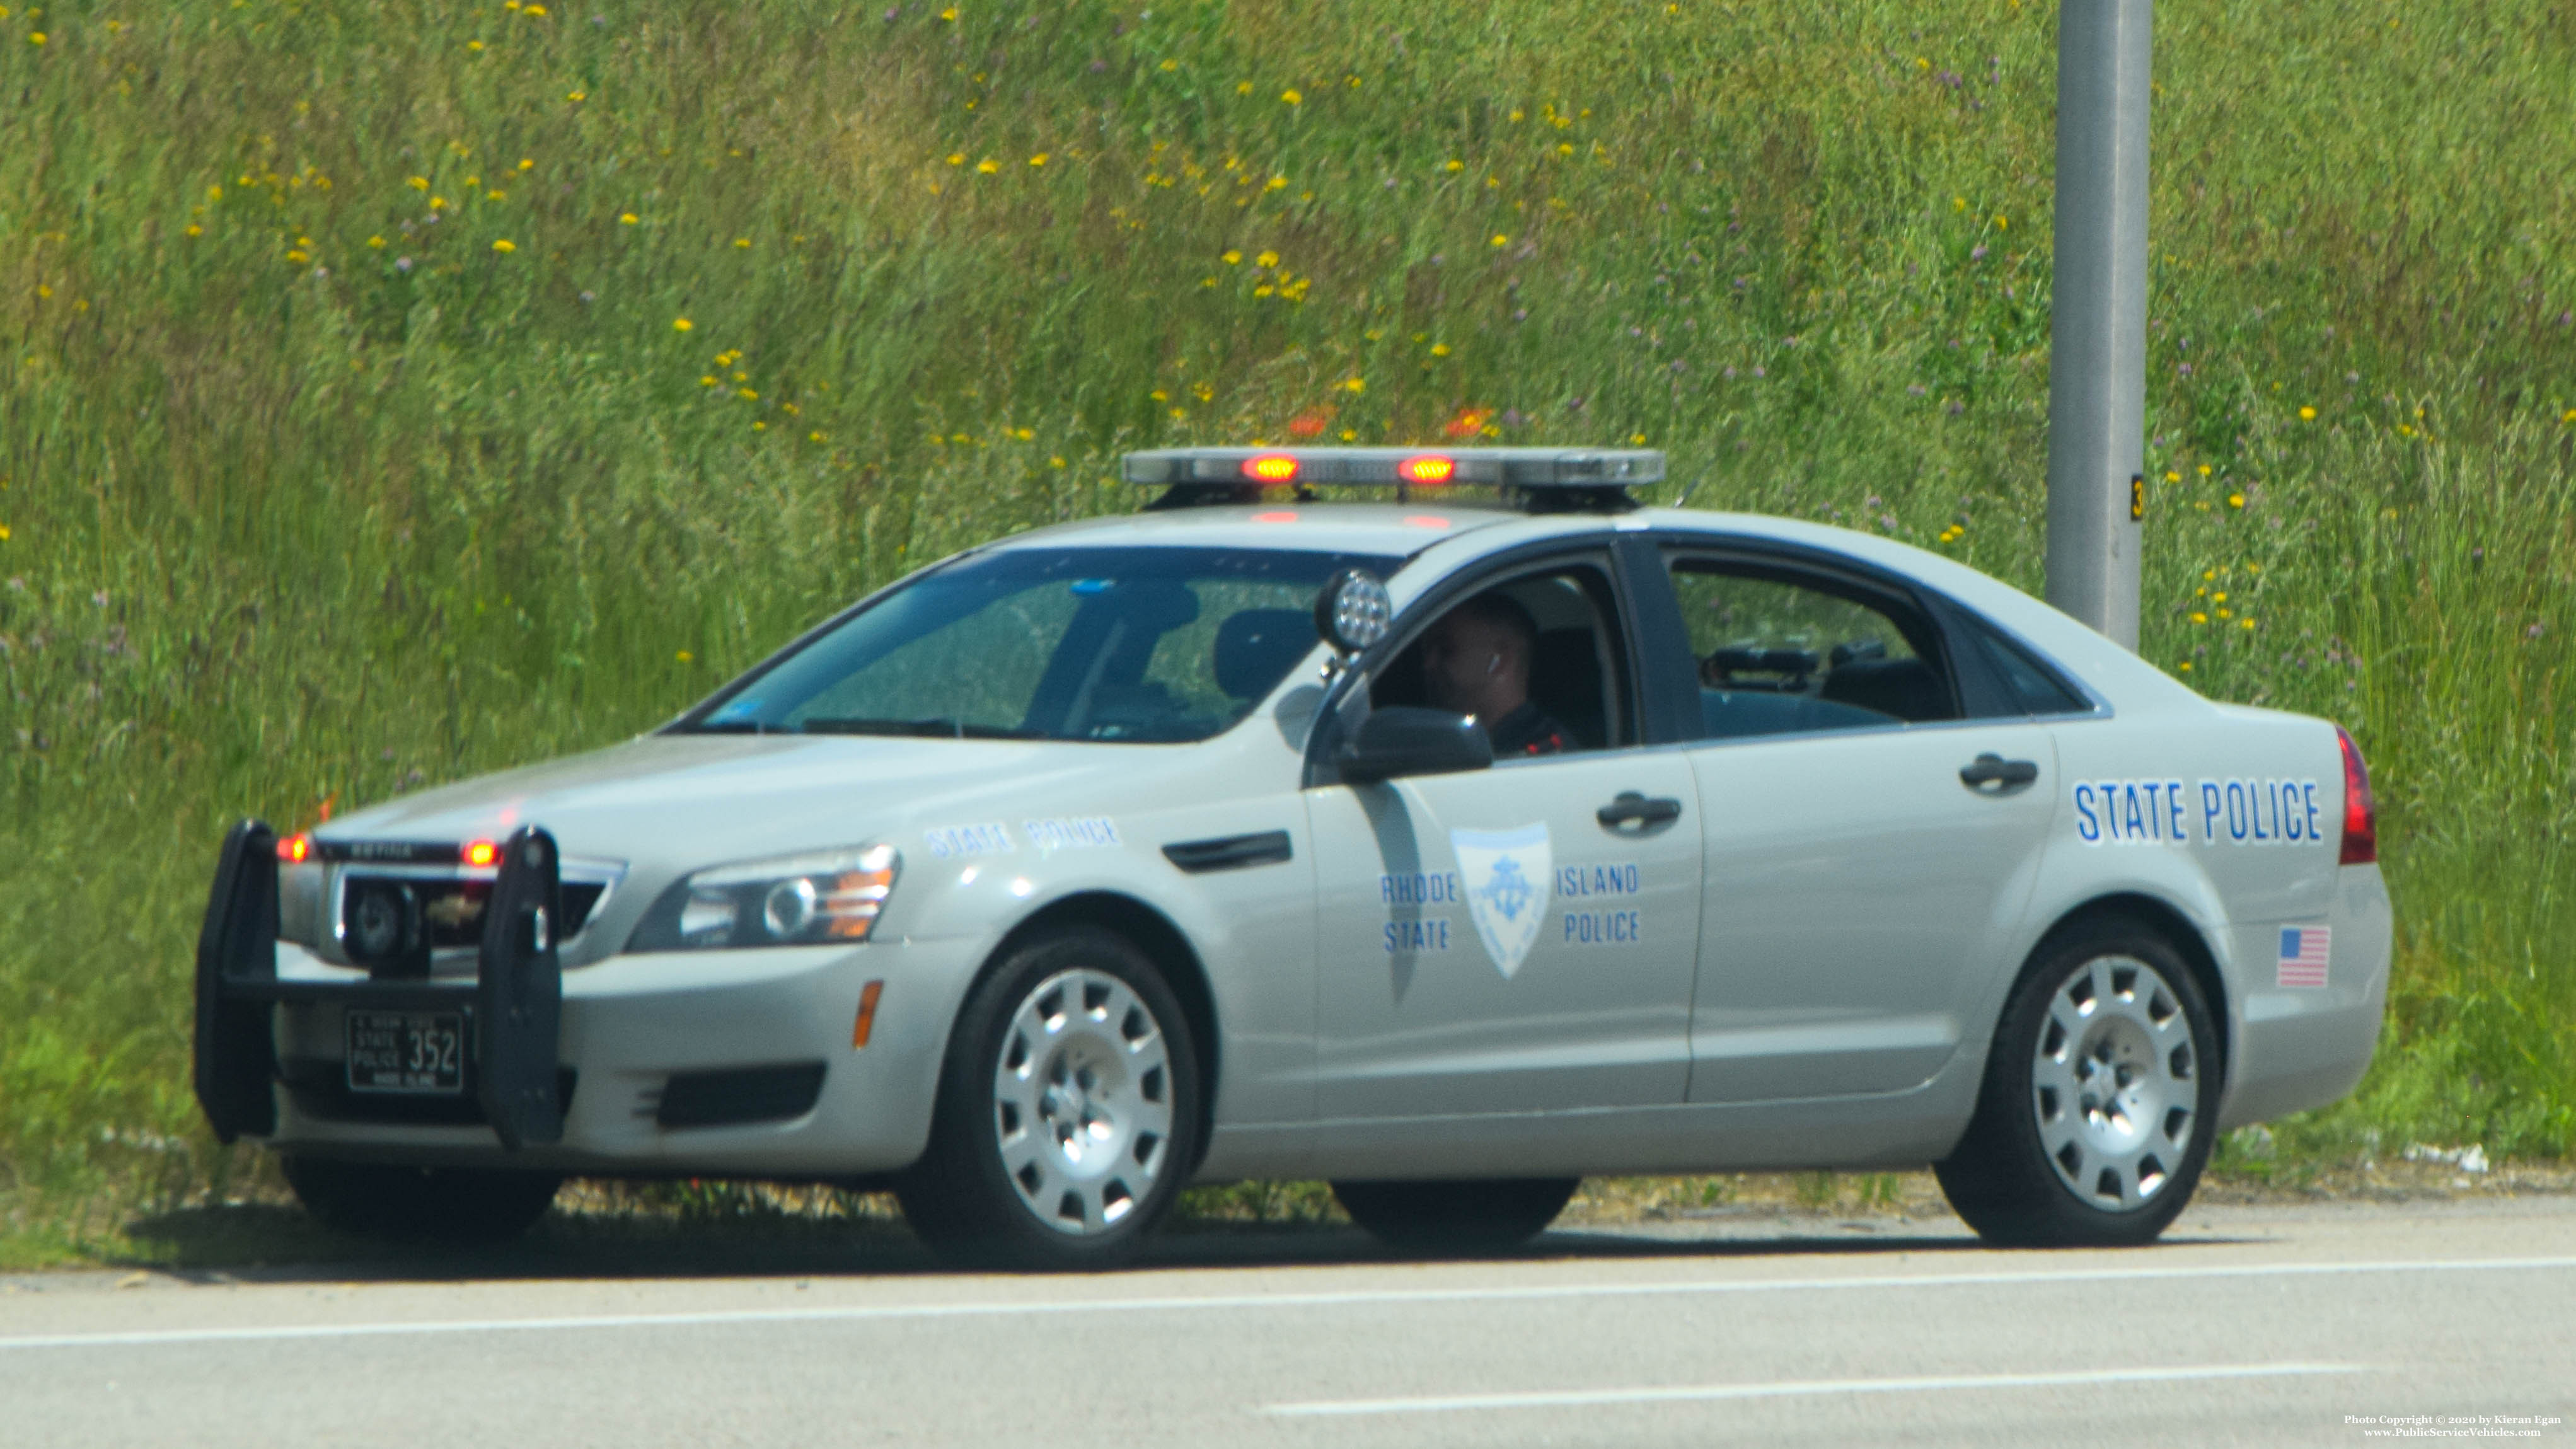 A photo  of Rhode Island State Police
            Cruiser 352, a 2013 Chevrolet Caprice             taken by Kieran Egan